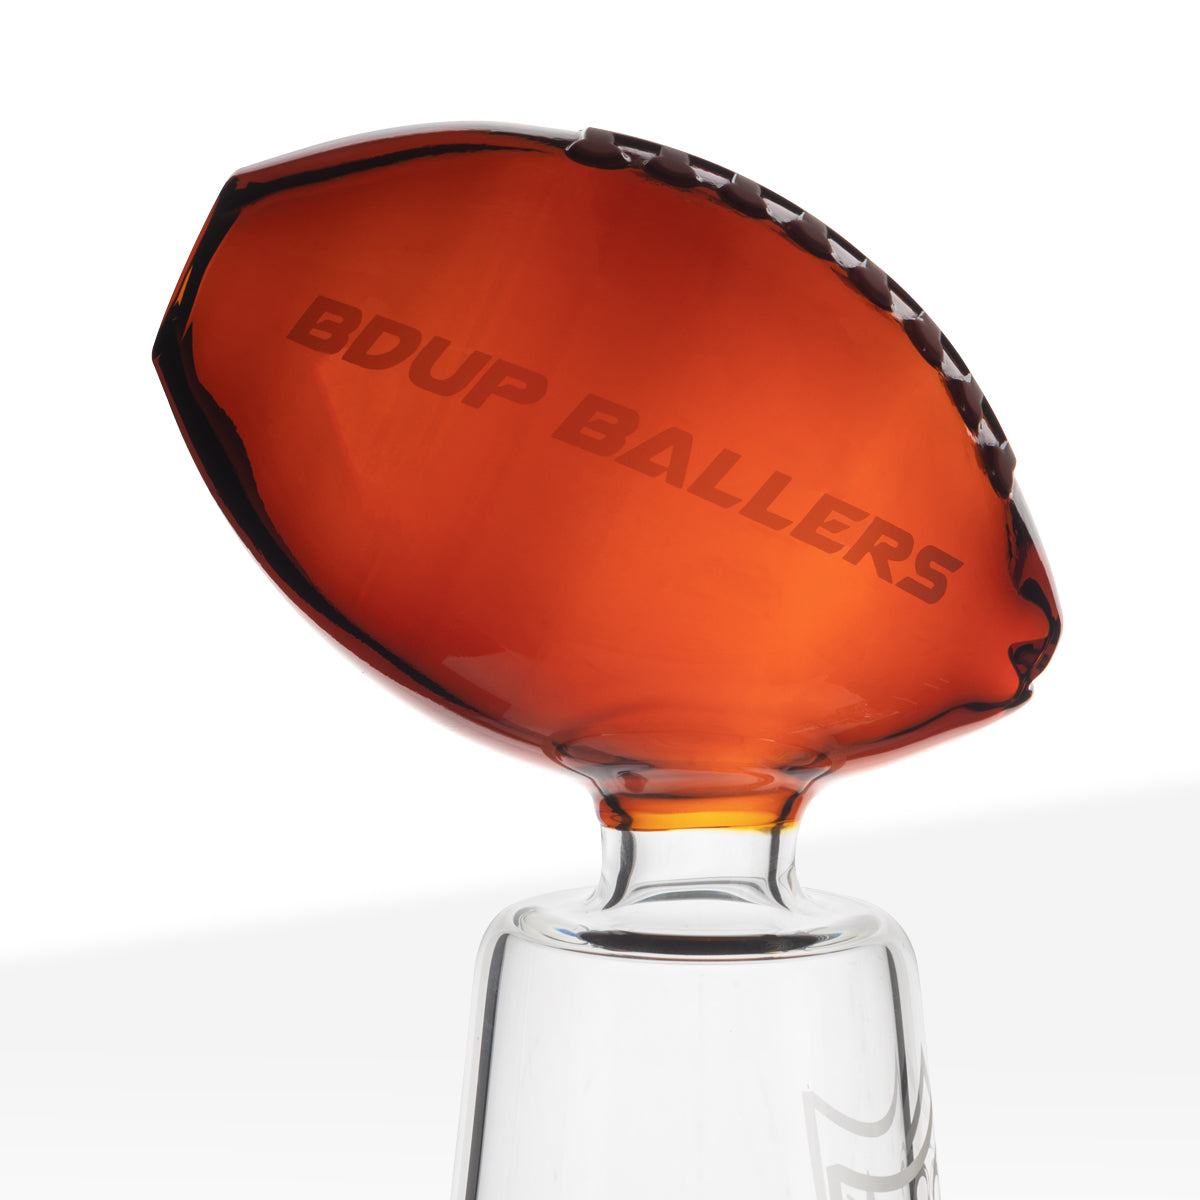 Custom BIO Glass | Football Trophy Water Pipe | 16" - 14mm - Amber